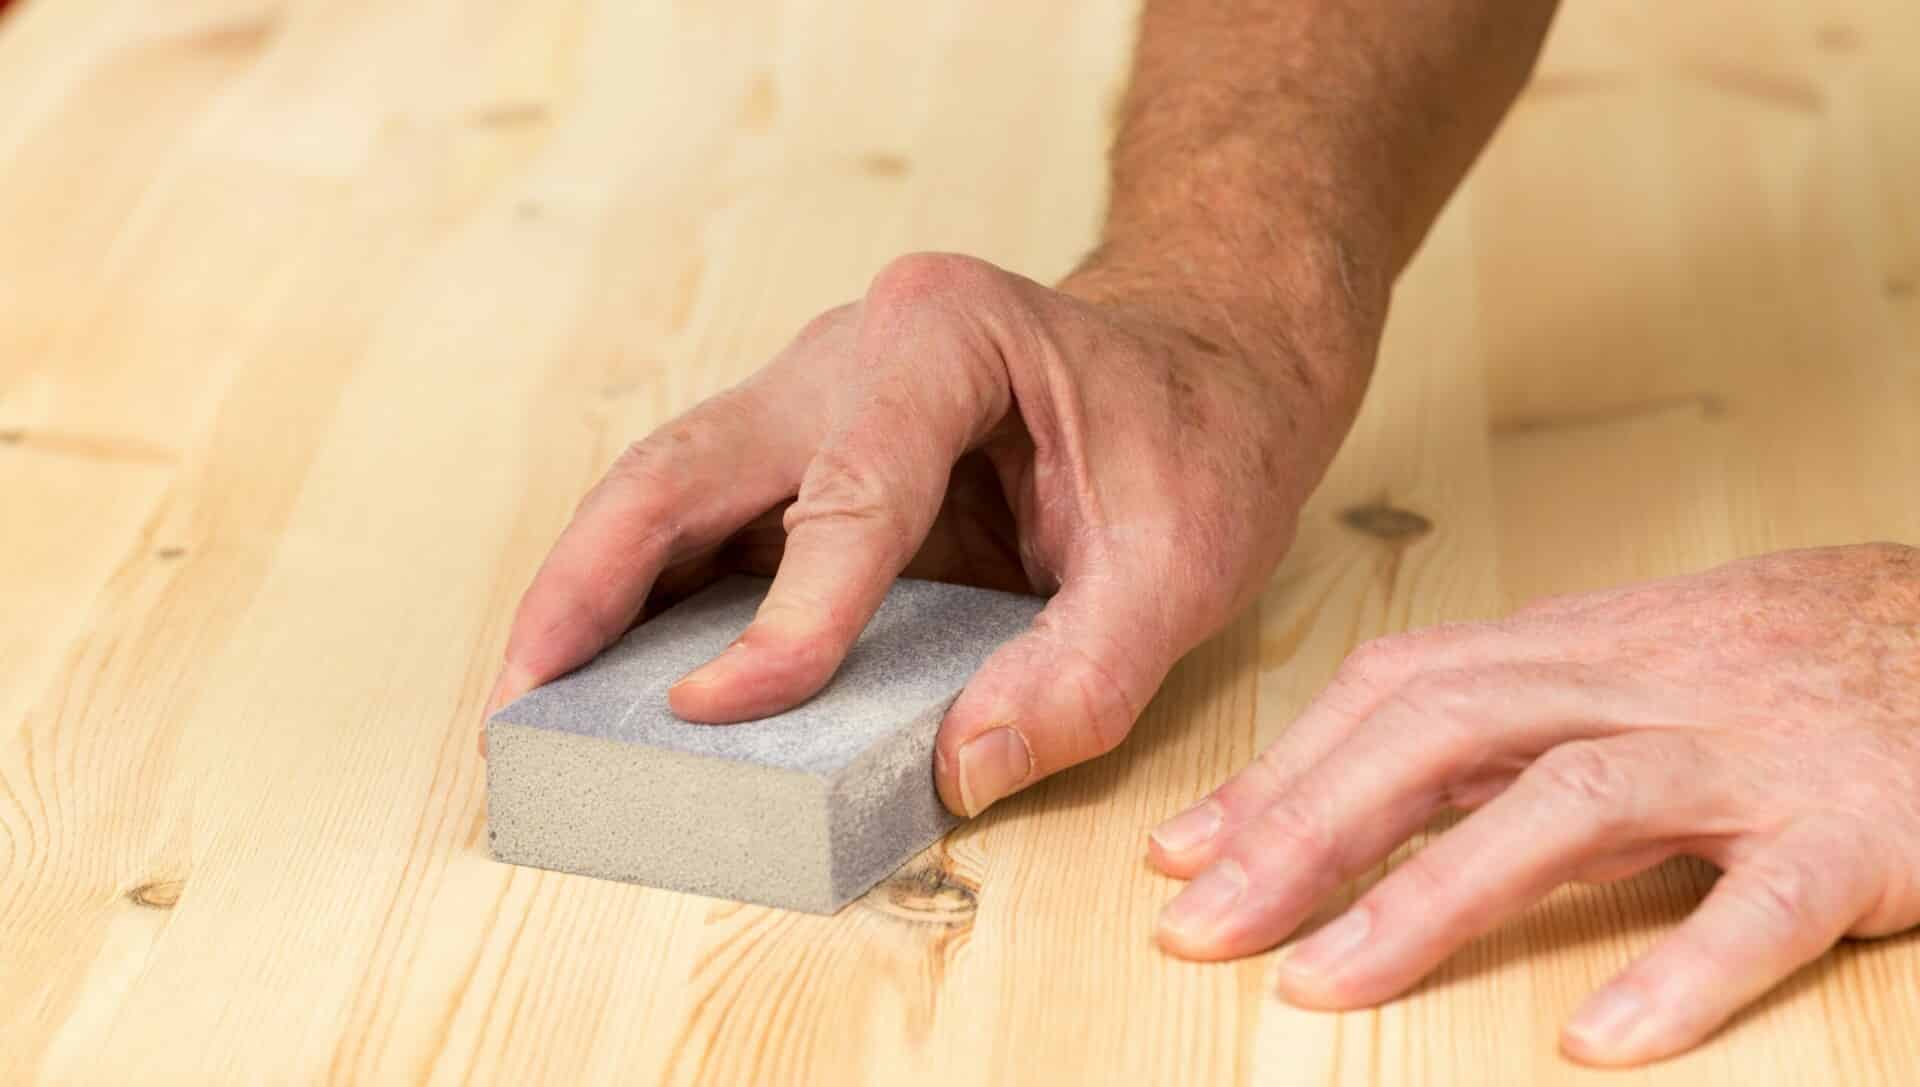 Hands sanding a wooden surface with a sanding block.